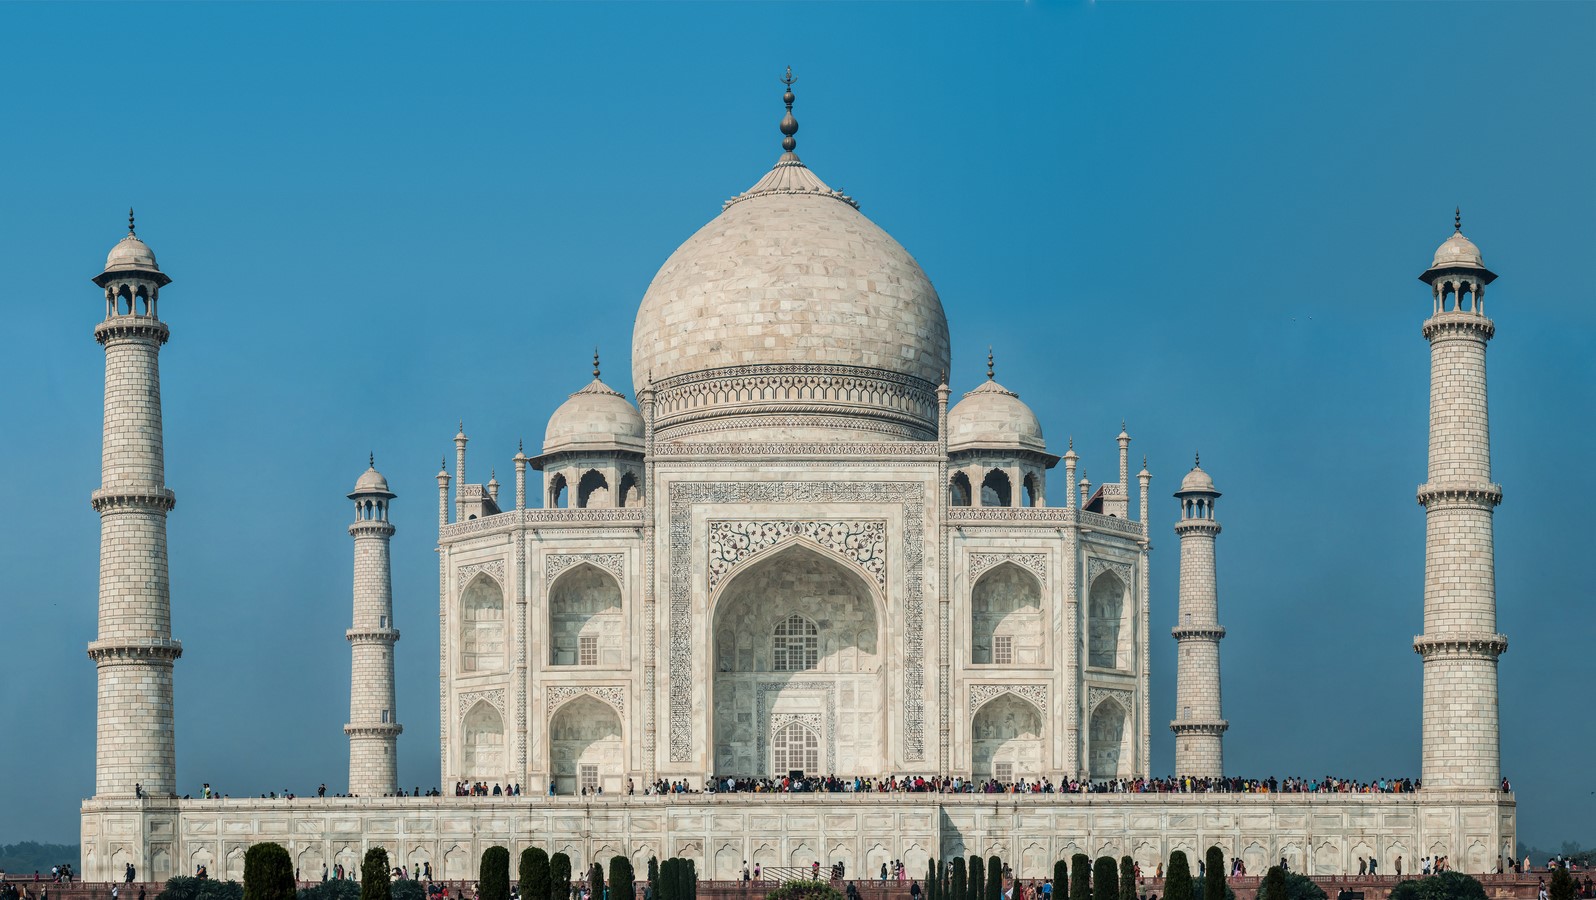 Ancient Architecture - The Taj Mahal, India - Sheet1